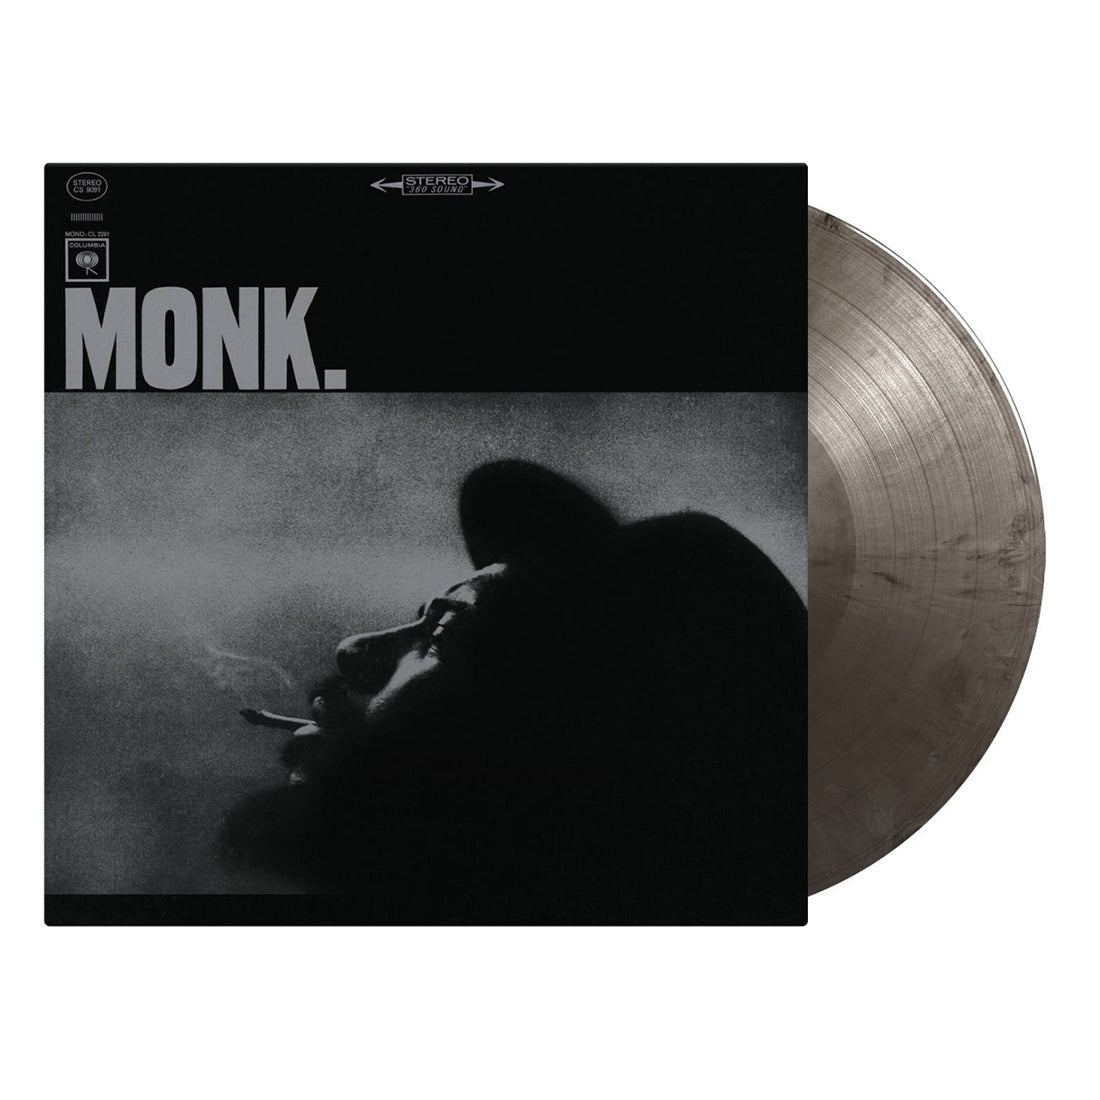 Thelonious Monk - Monk: Silver & Black Marble Vinyl LP